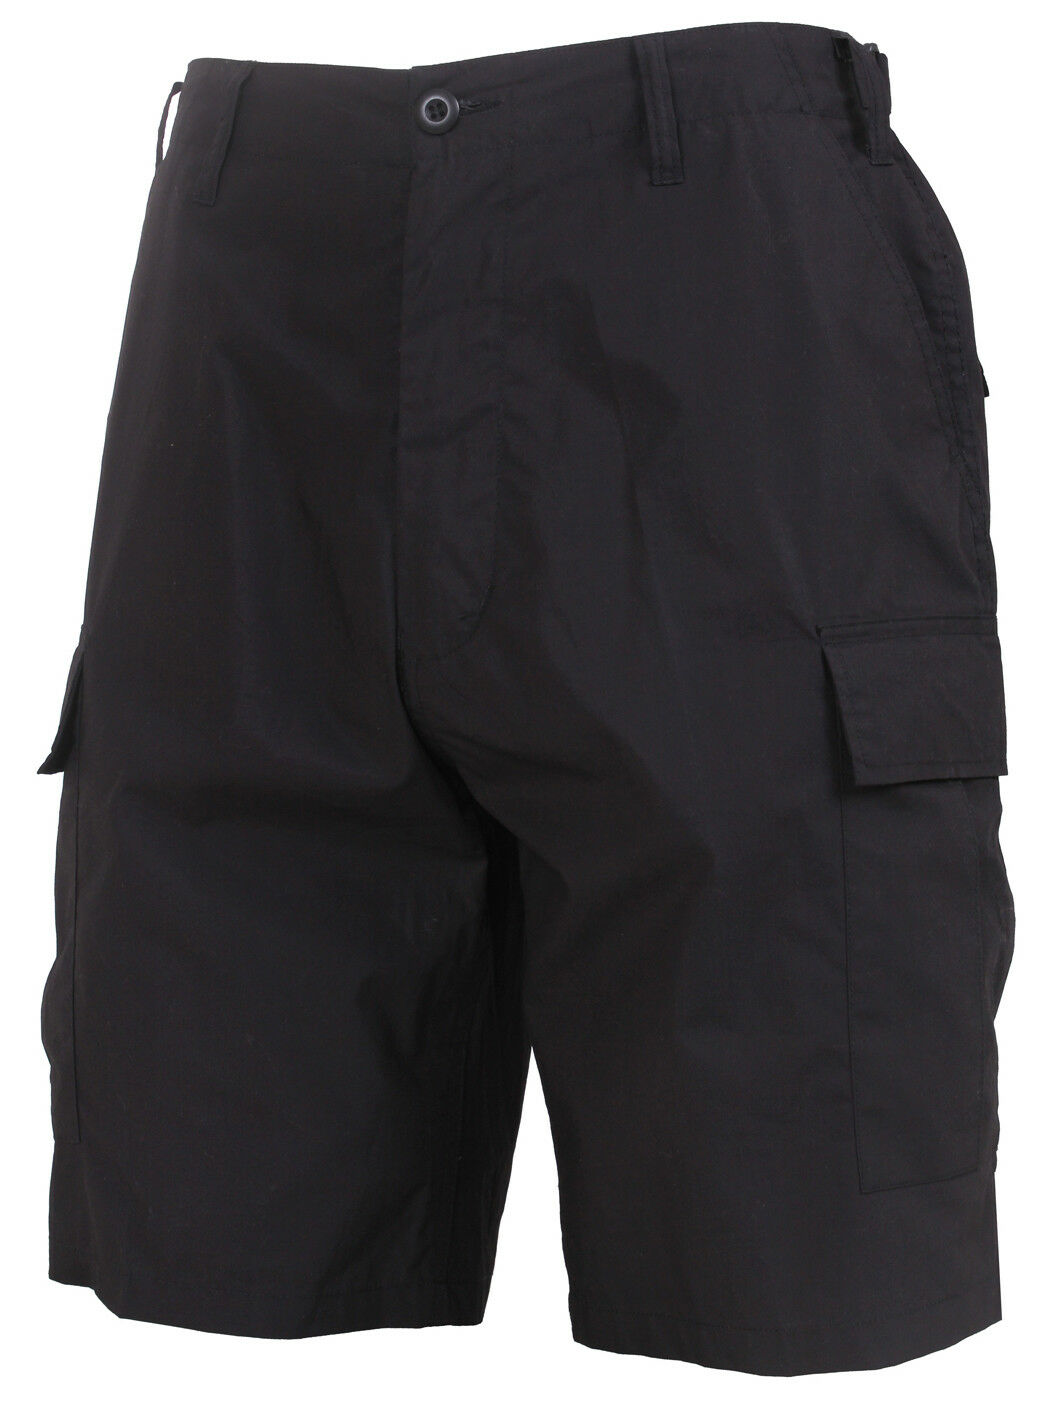 Rothco Lightweight Tactical BDU Shorts - Black